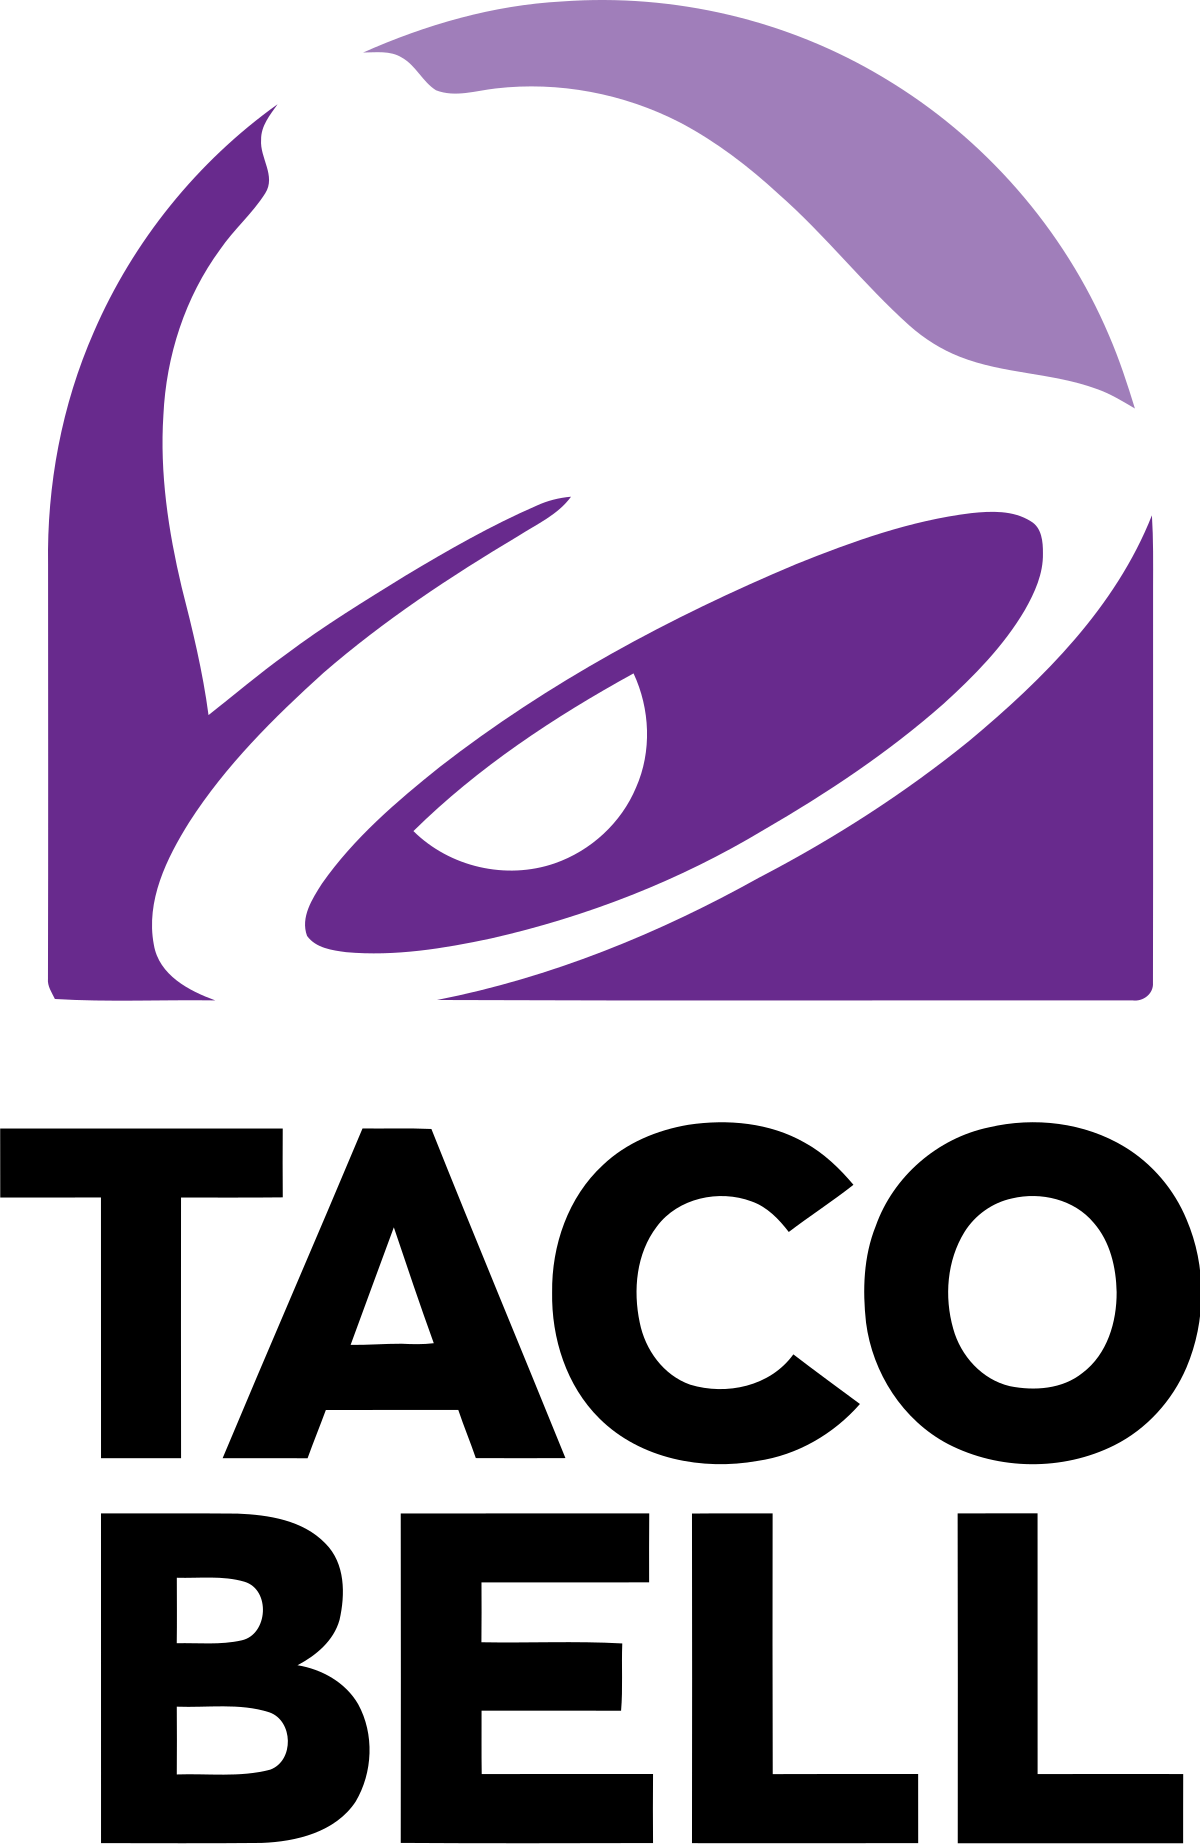 tacobell logo